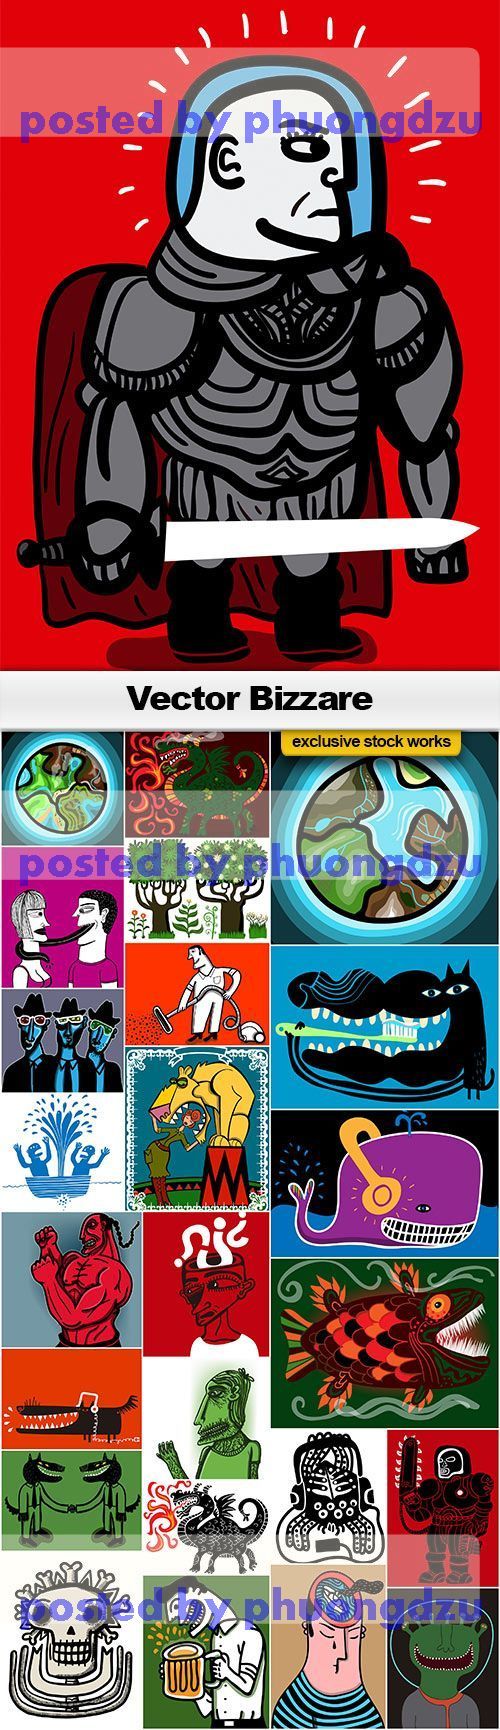 Vector Bizzare part 1